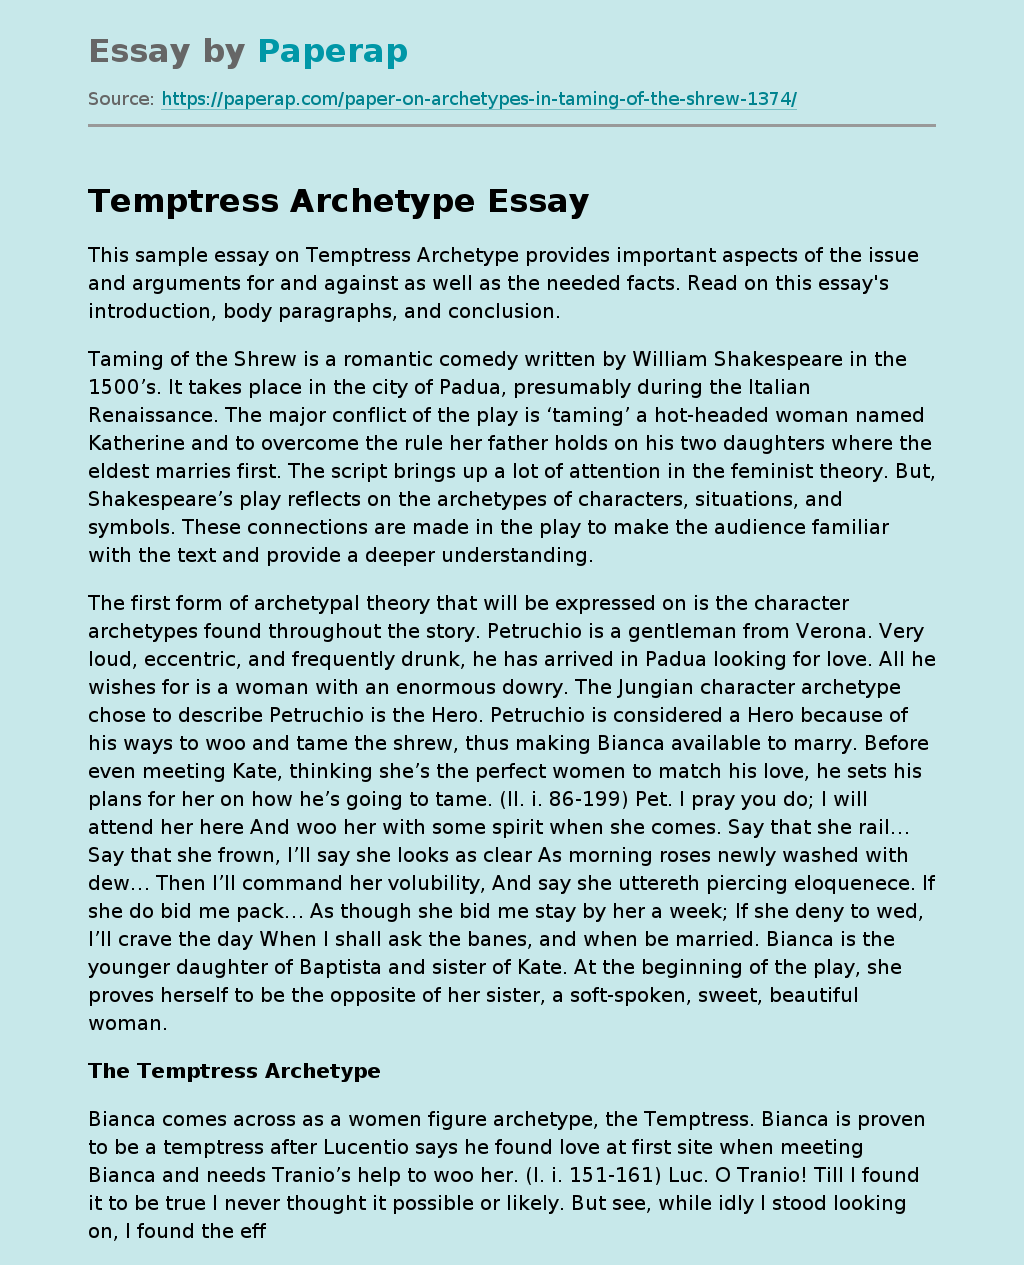 Temptress Archetype